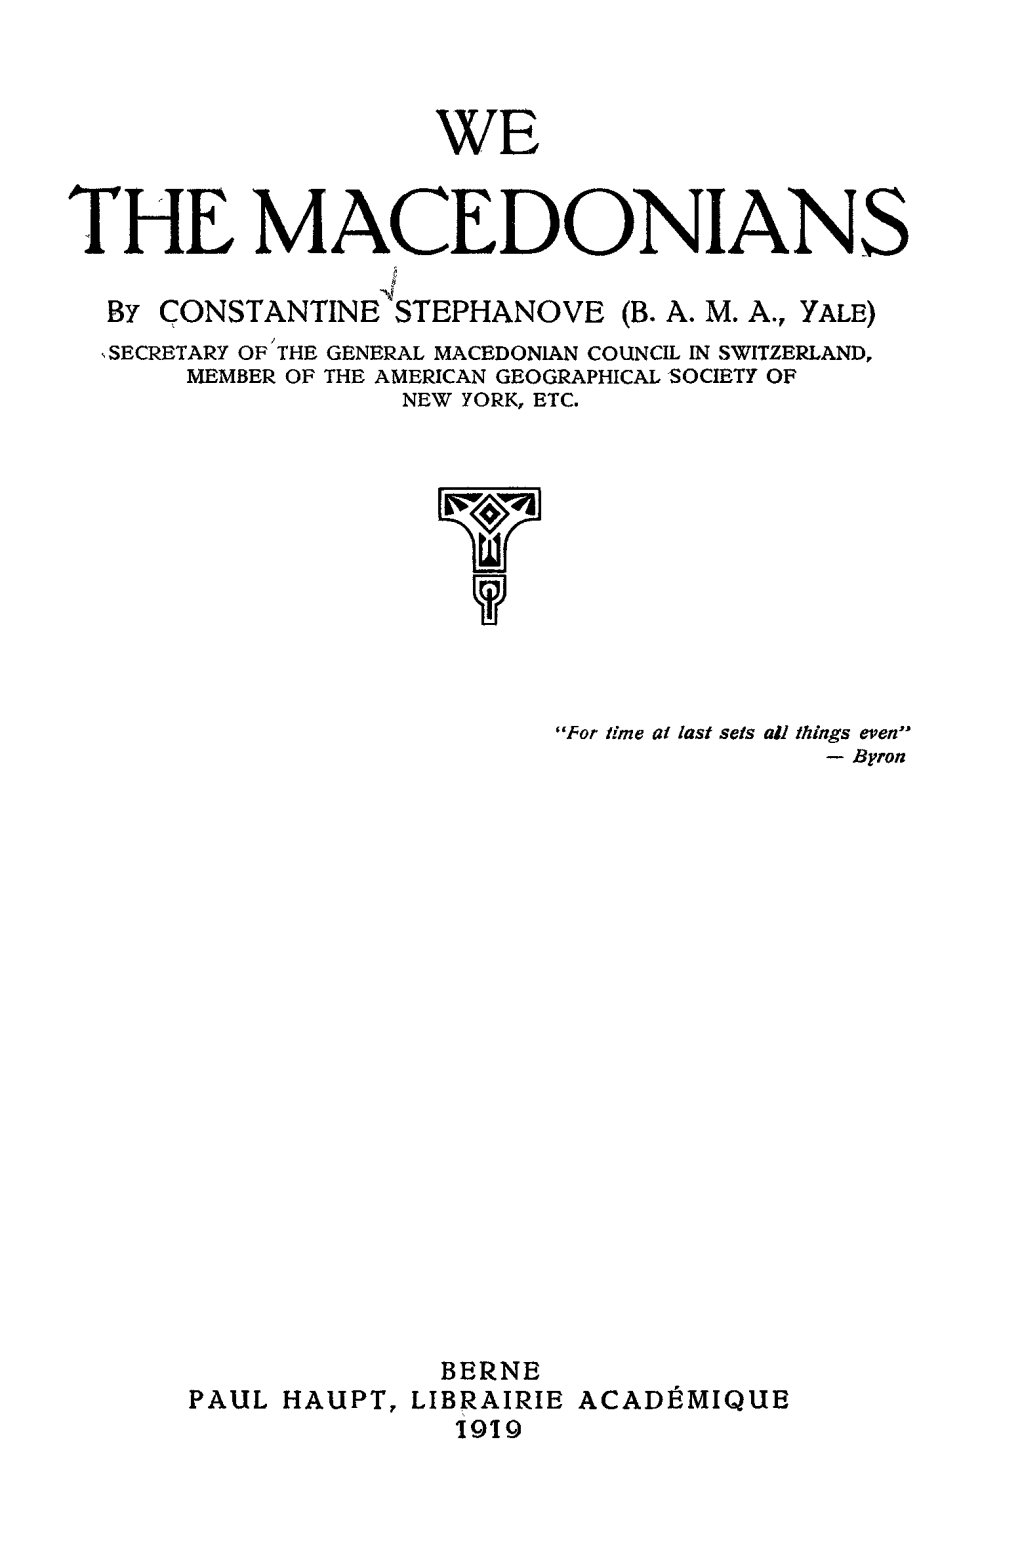 THE MACEDONIANS by ÇONSTANTINE^STEPHANOVE (B